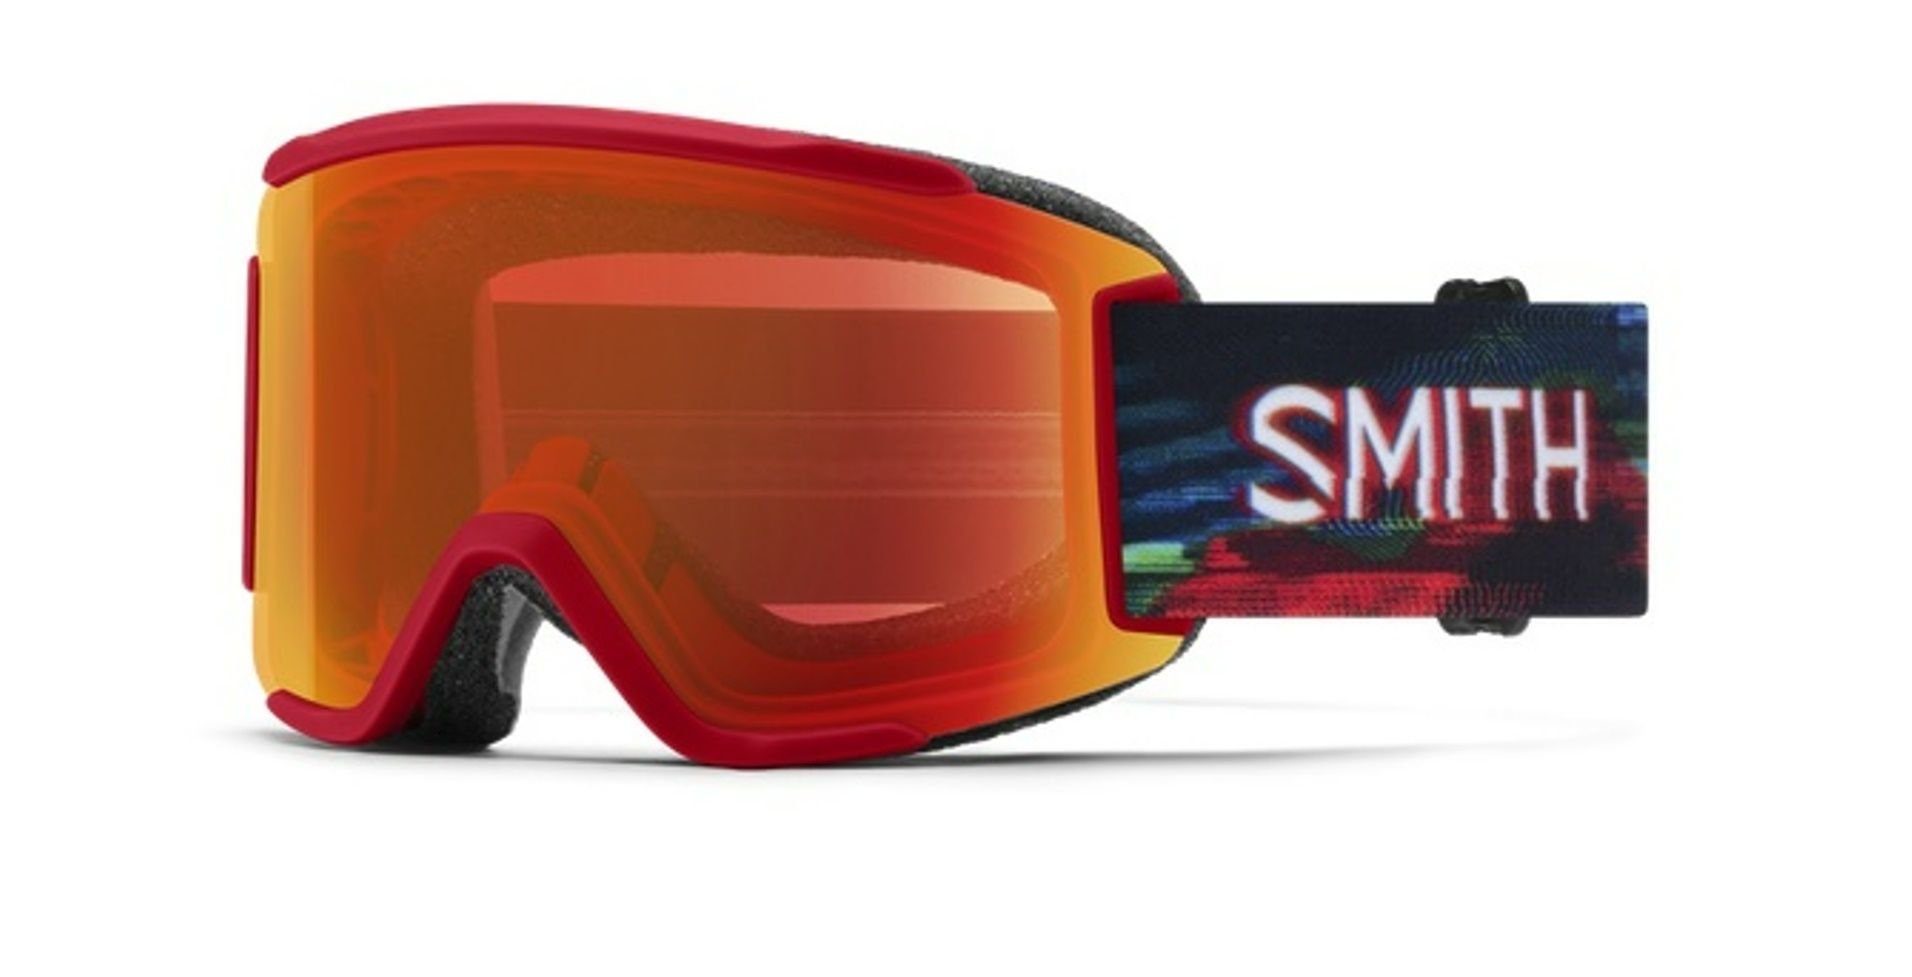 Smith Squad S, Smith rot Schneebrille Skibrille